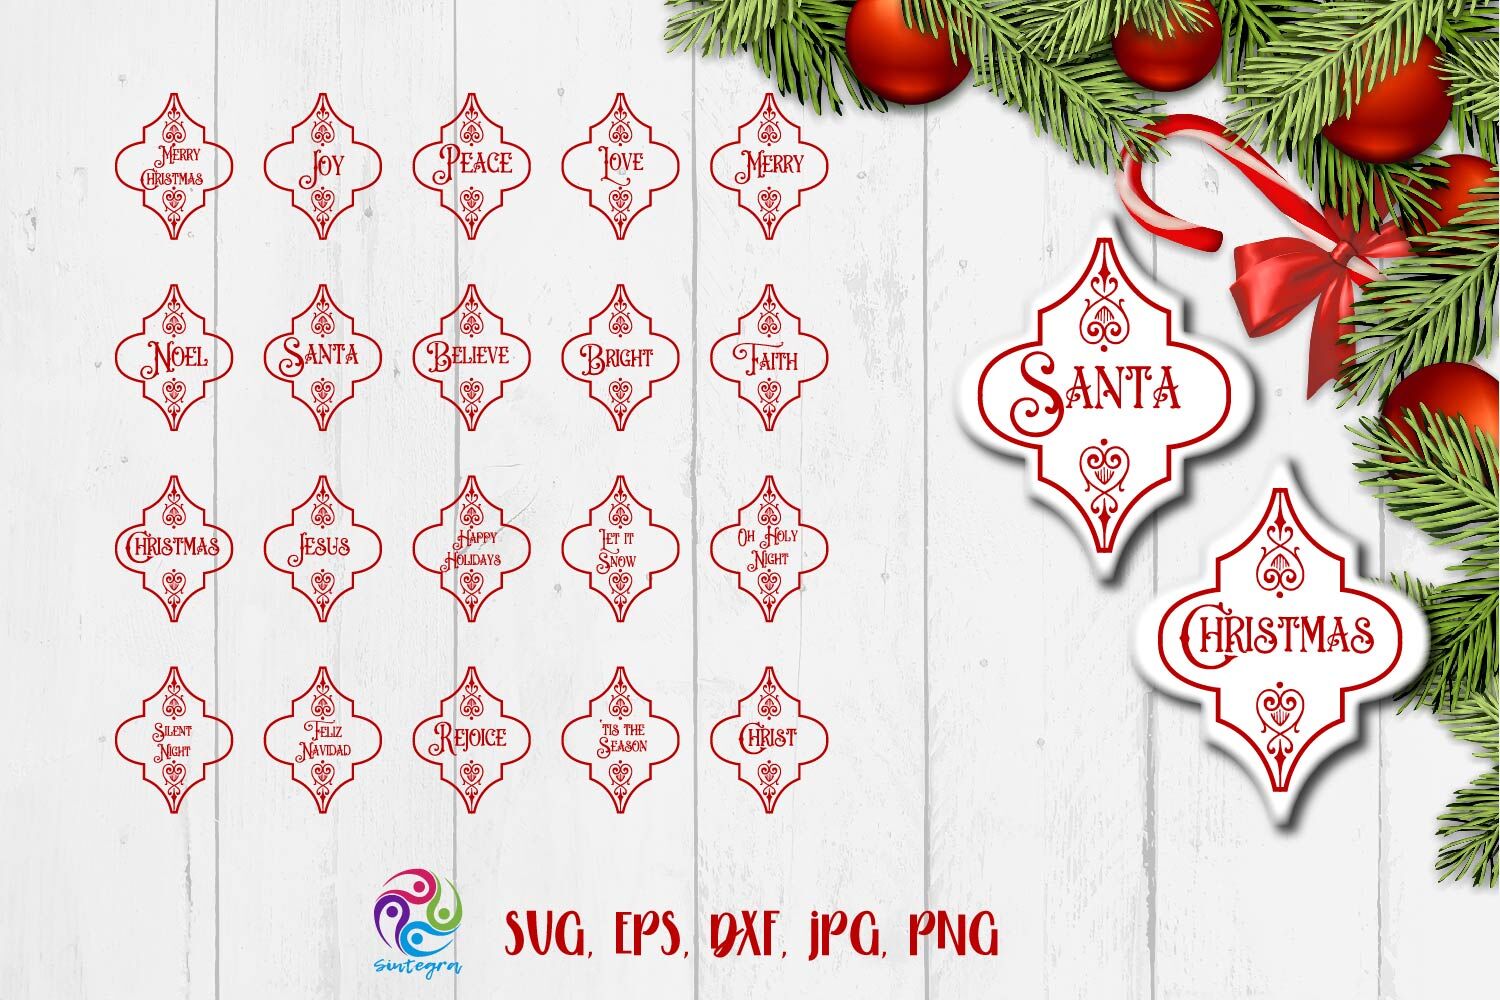 Download Christmas Arabesque Ornament Tile Bundle Svg By Sintegra Thehungryjpeg Com